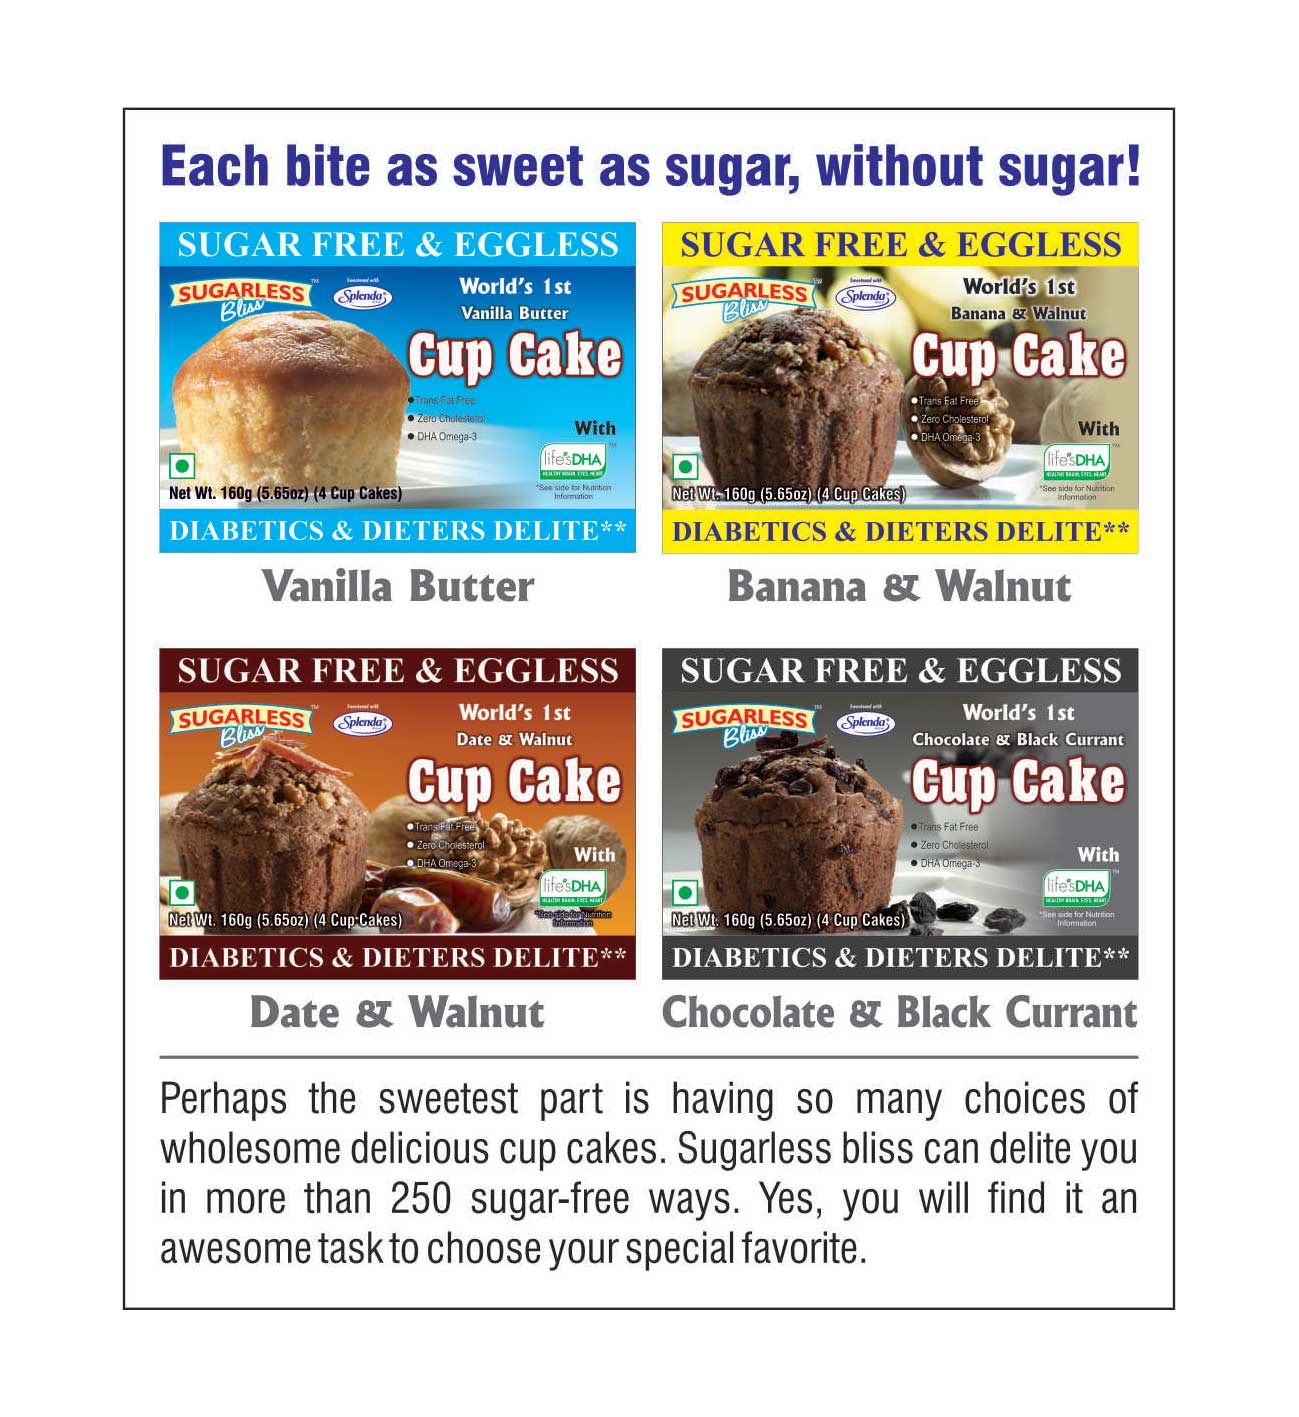 Sugar Free & Eggless Cup Cake Date & Walnut - 160g